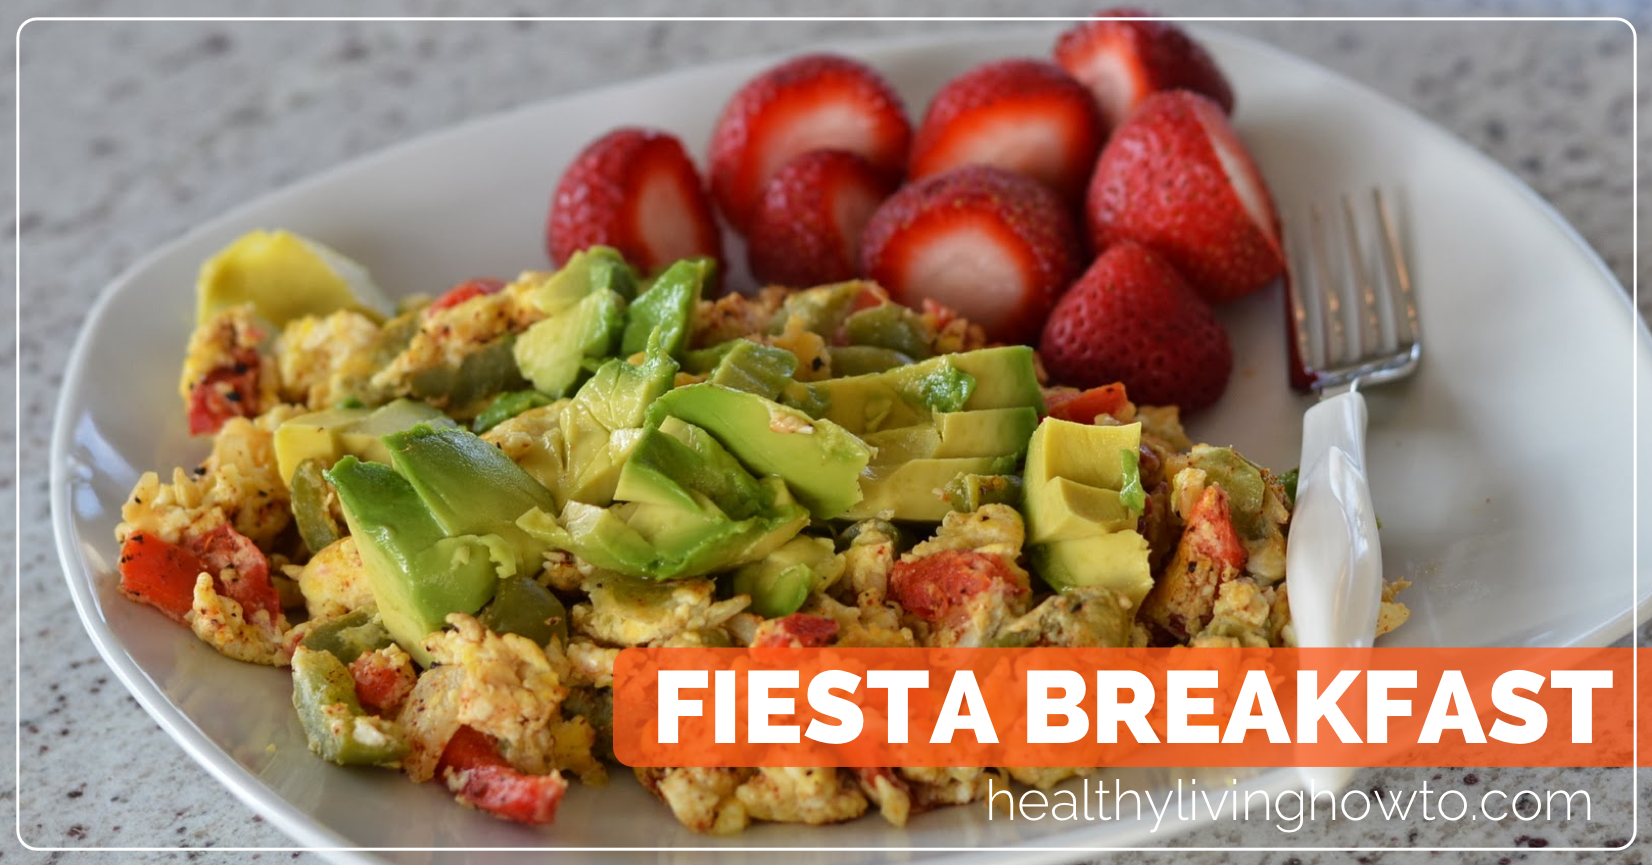 Fiesta Breakfast | healthylivinghowto.com featured